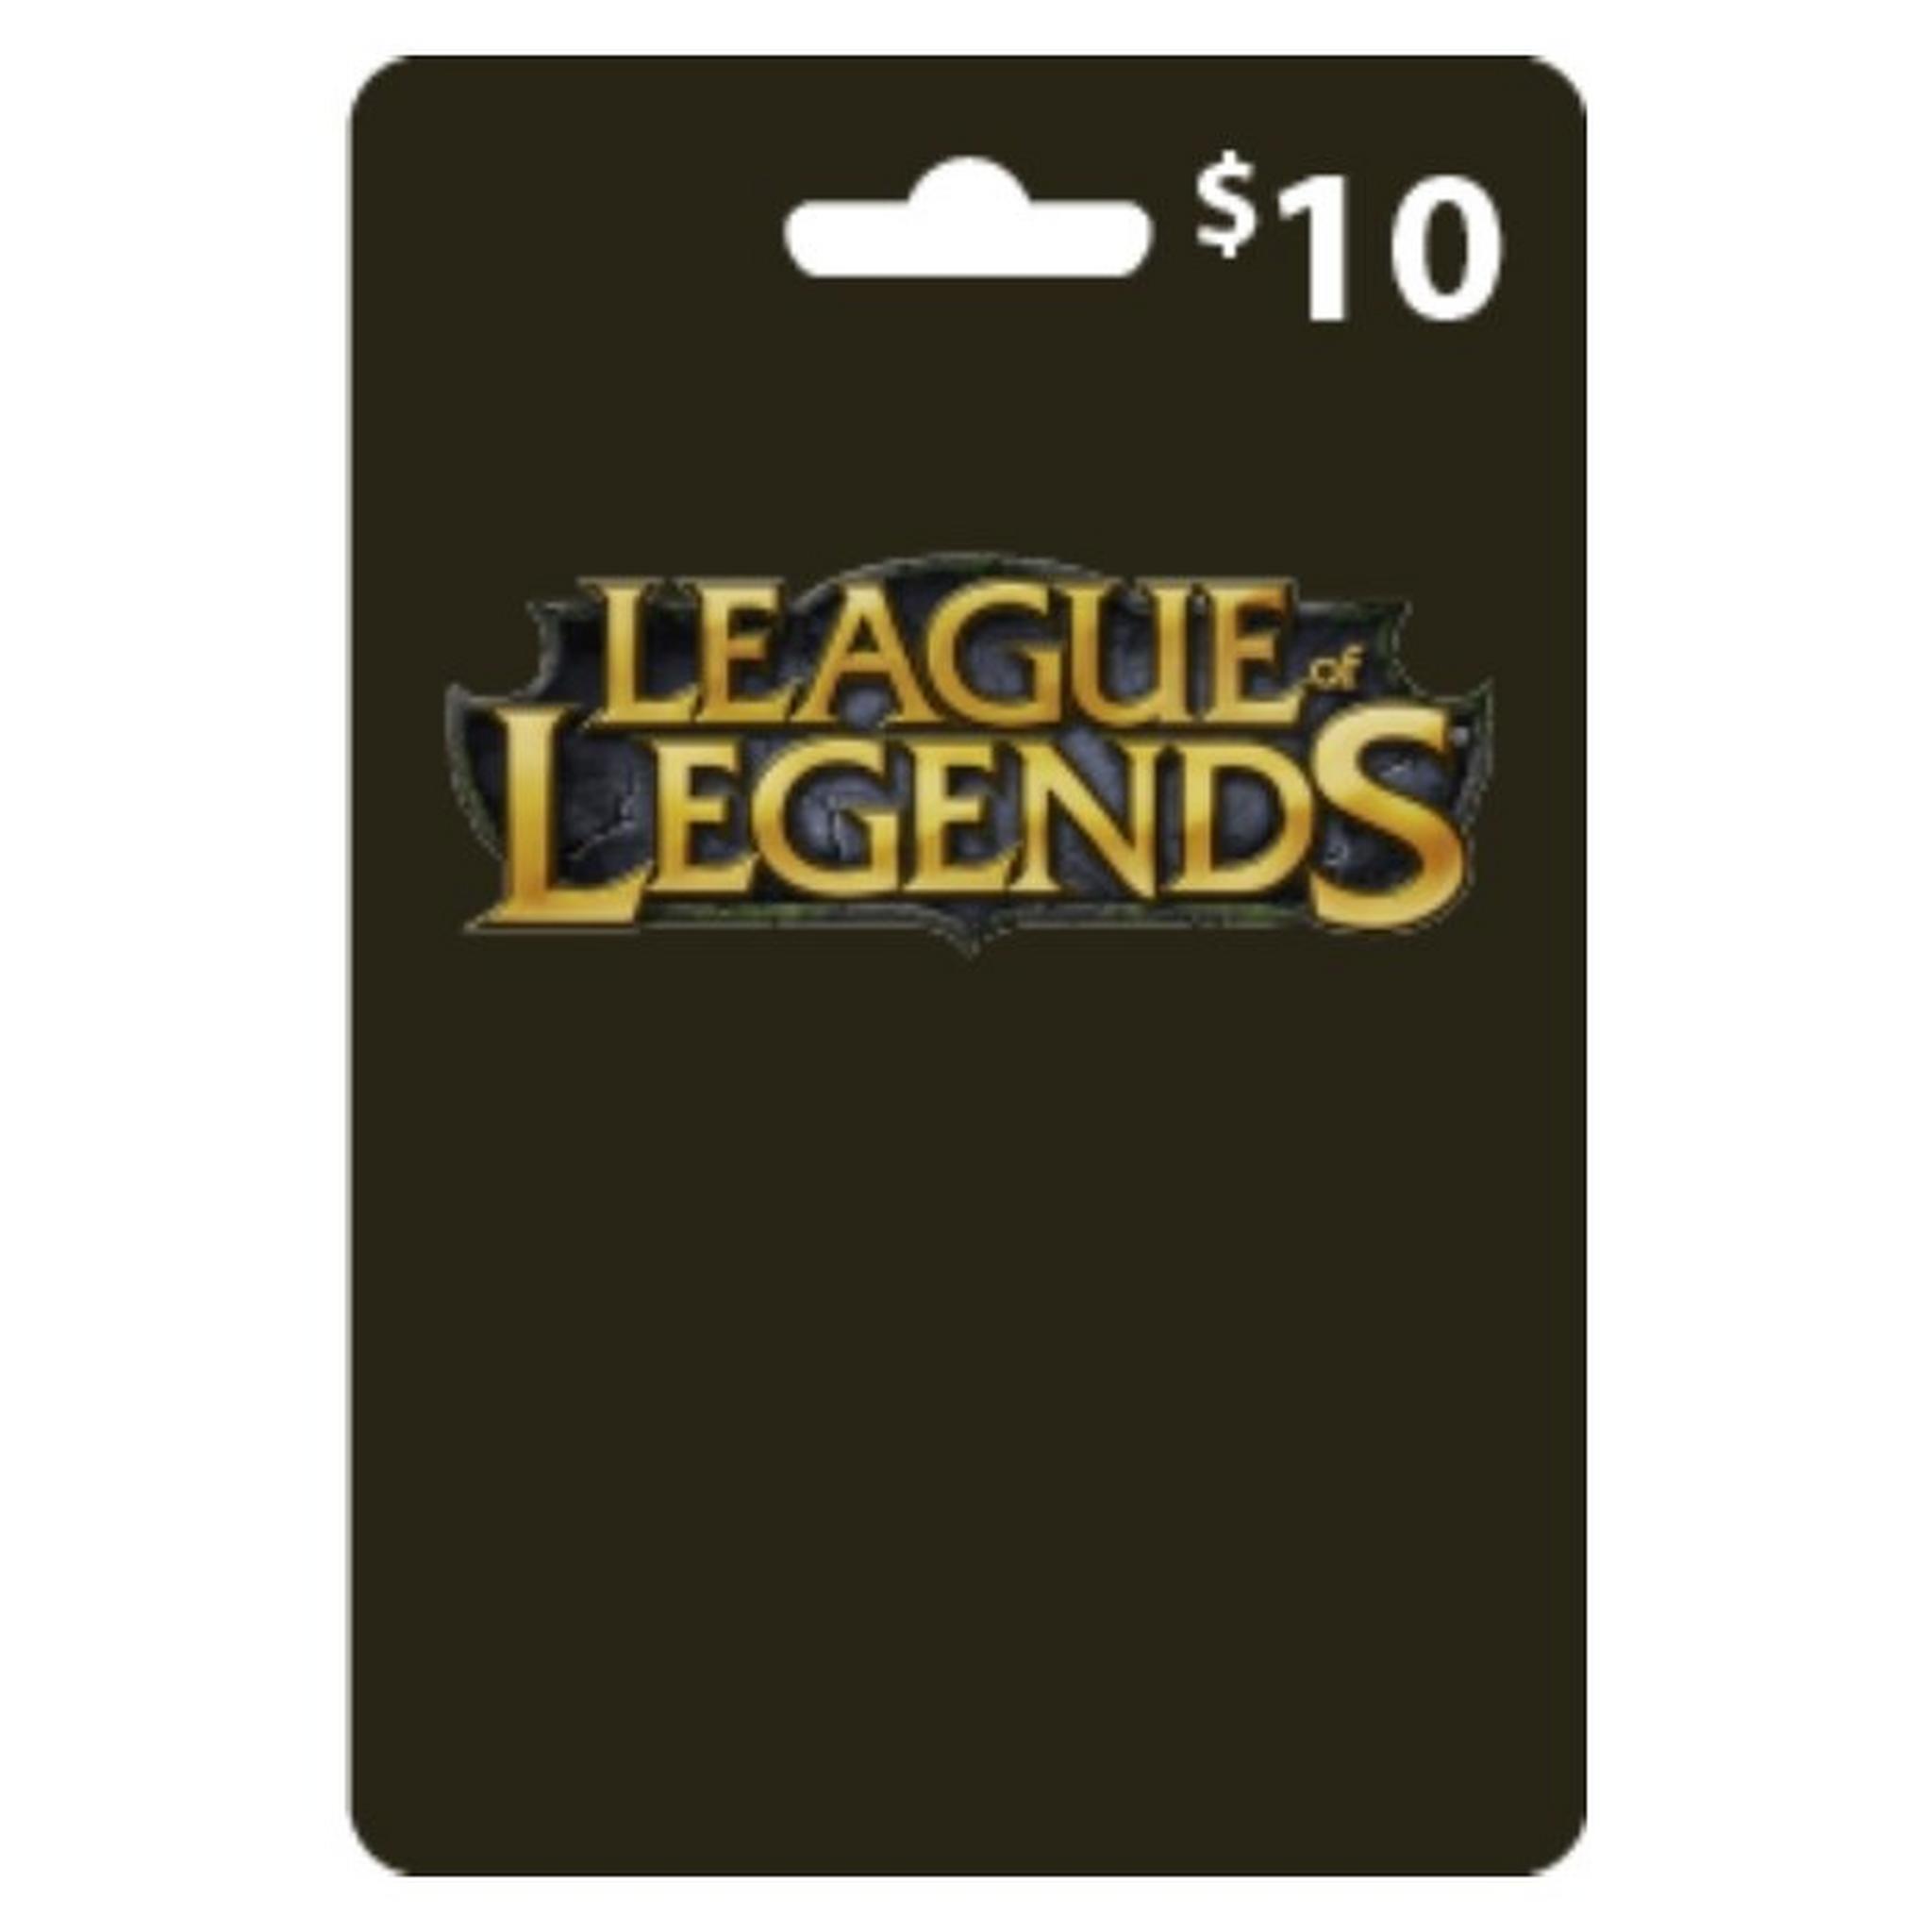 League Of Legends - $10 Card (North America)